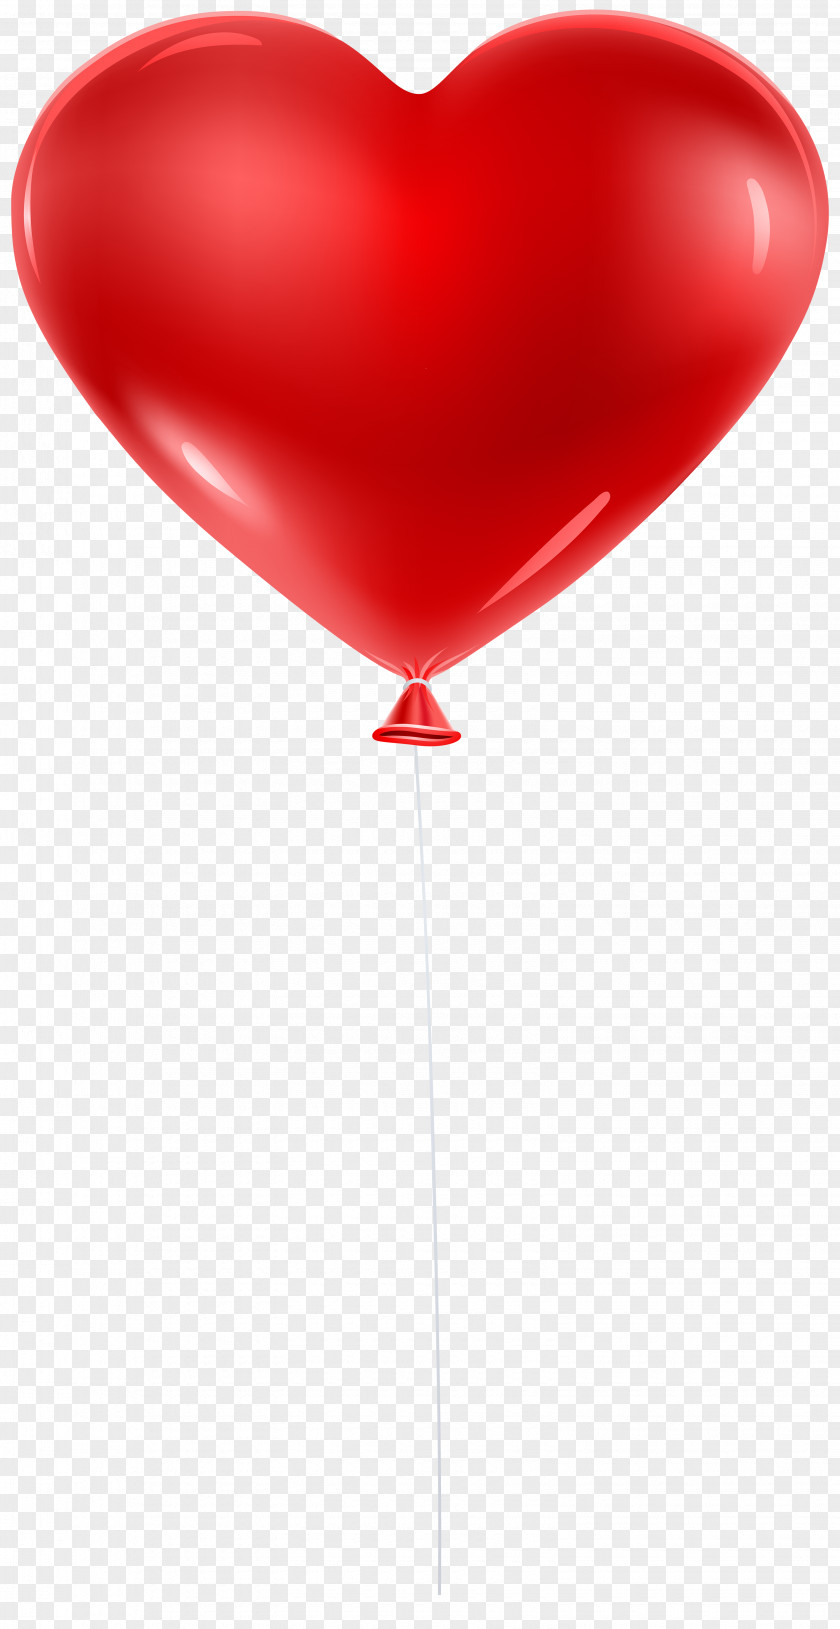 Red Balloon Heart Transparent Clip Art Cardiovascular Disease Circulatory System Myocardial Infarction Health PNG